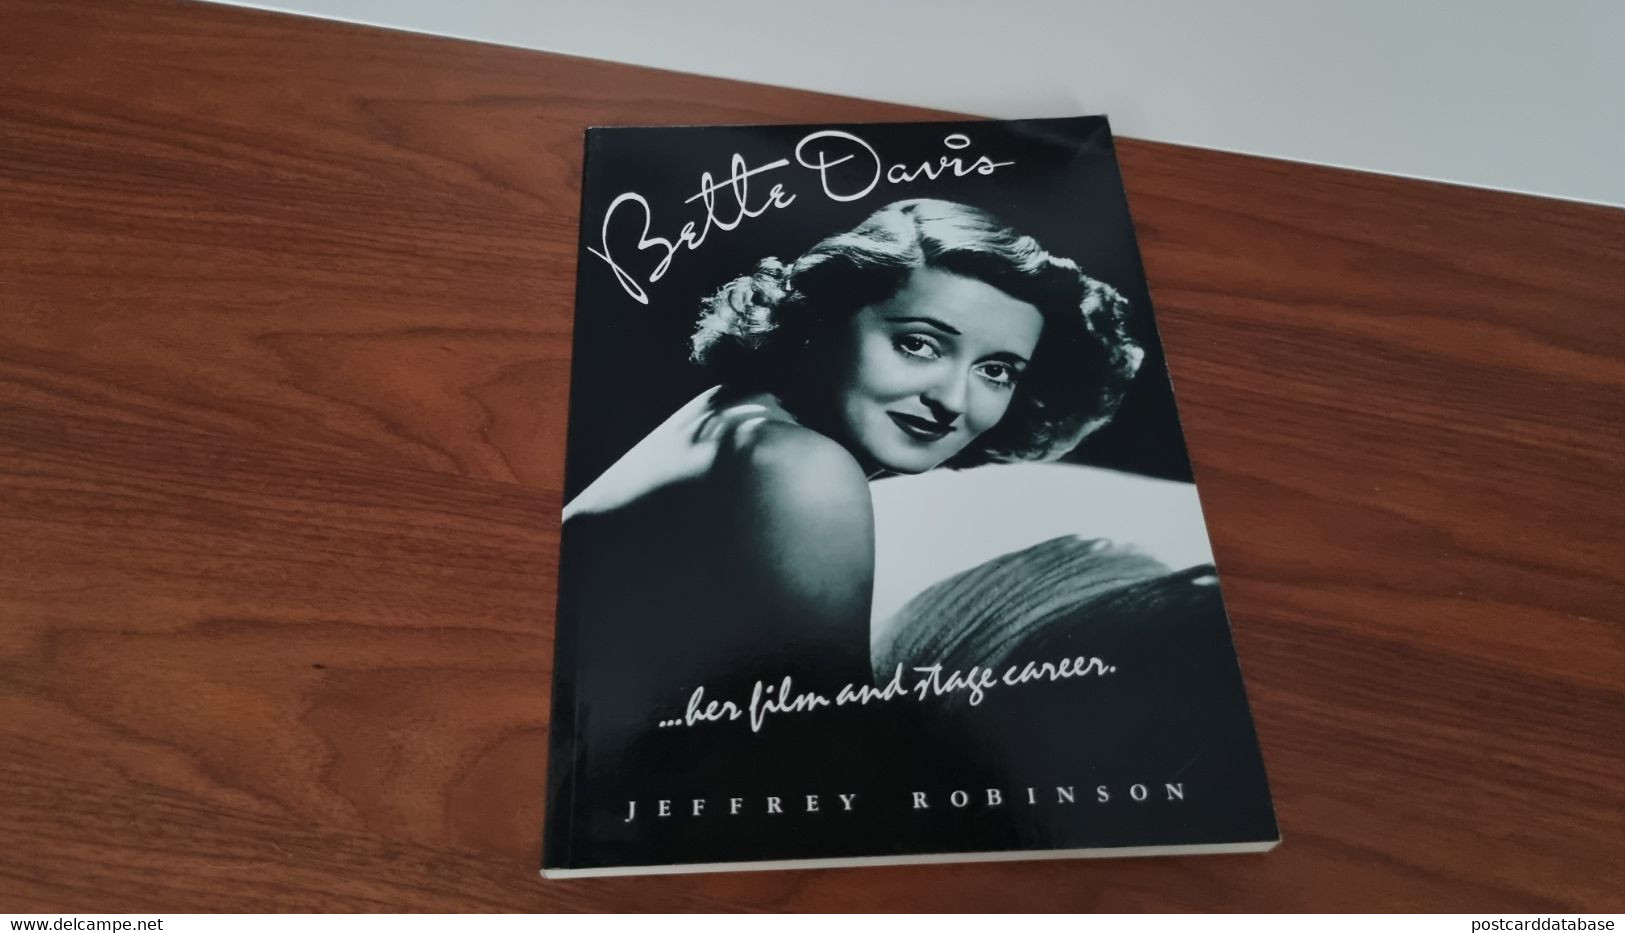 Bette Davis Her Film And Stage Career - Jeffrey Robinson - Cine